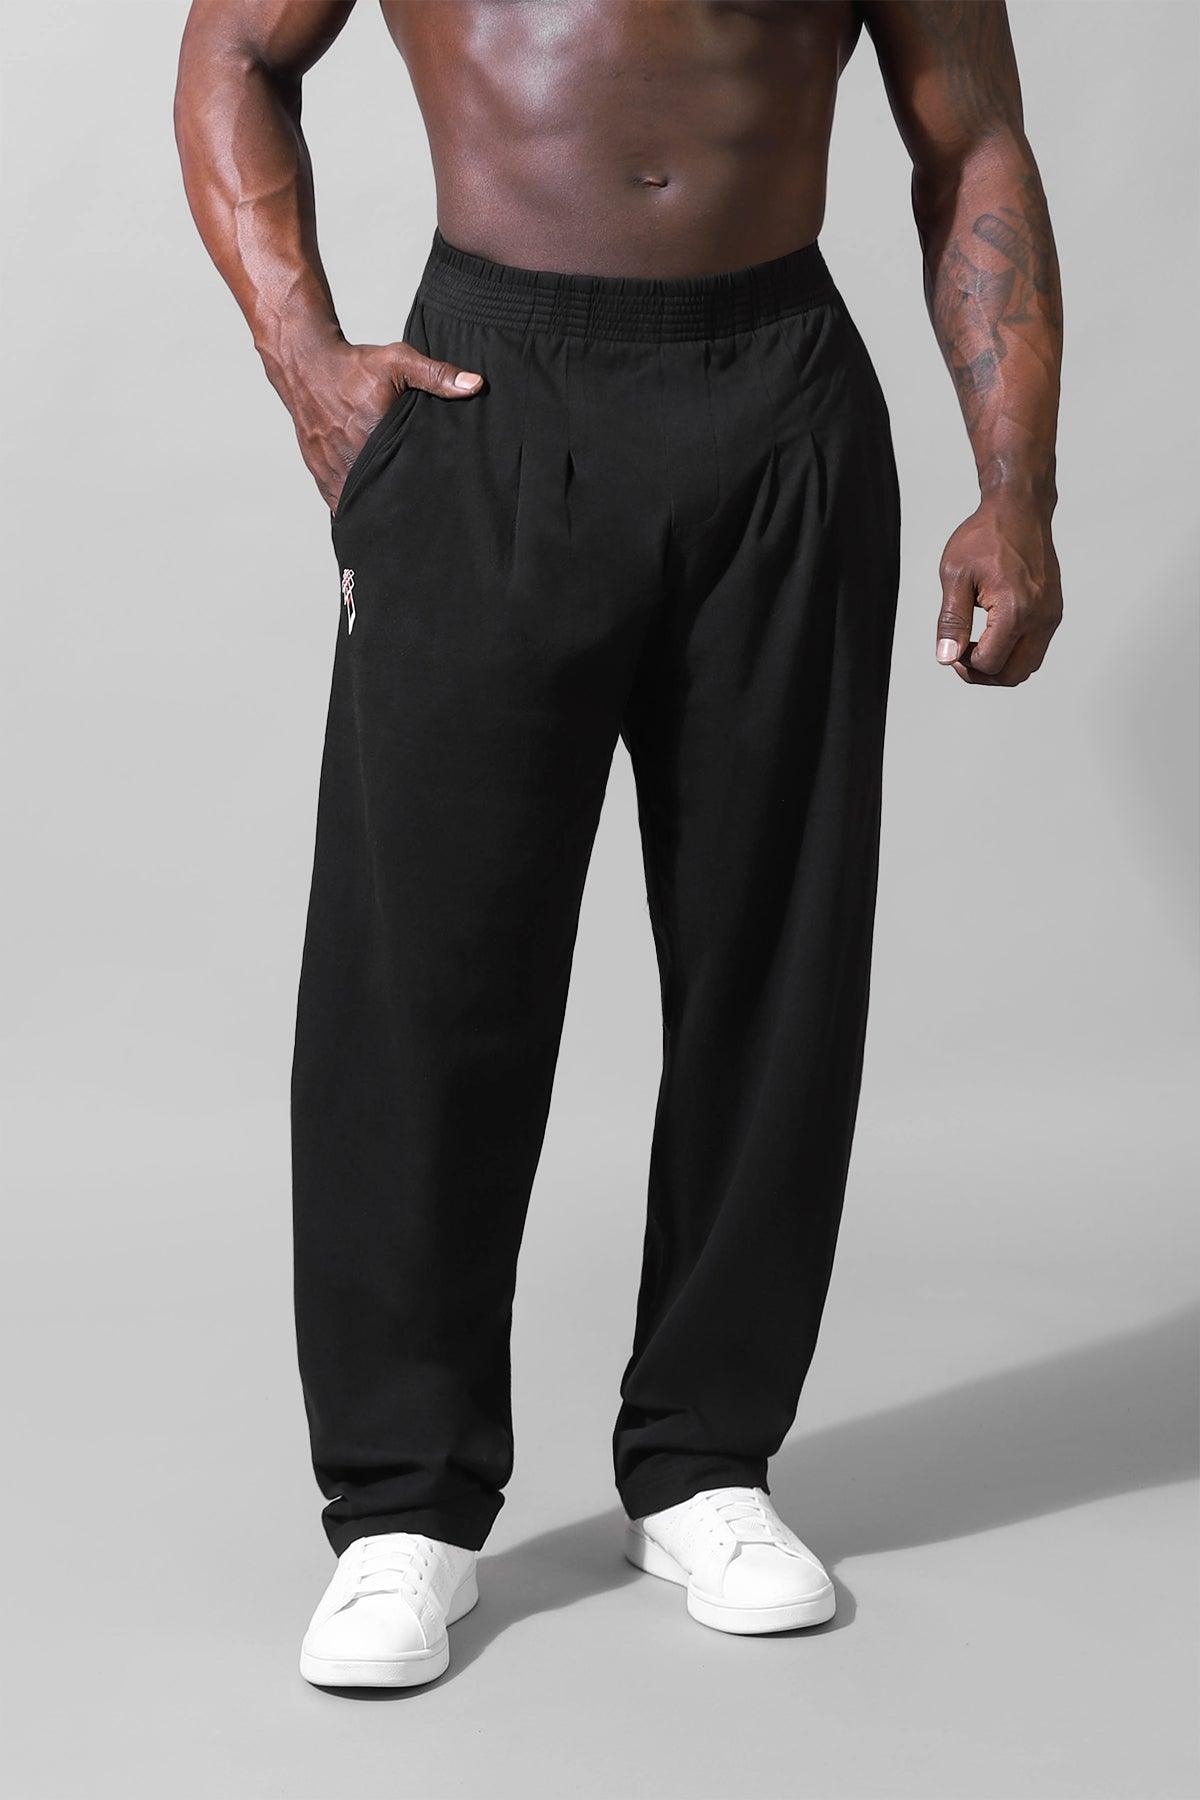 Retro Oversize Bodybuilding Pants - Black - Jed North Canada